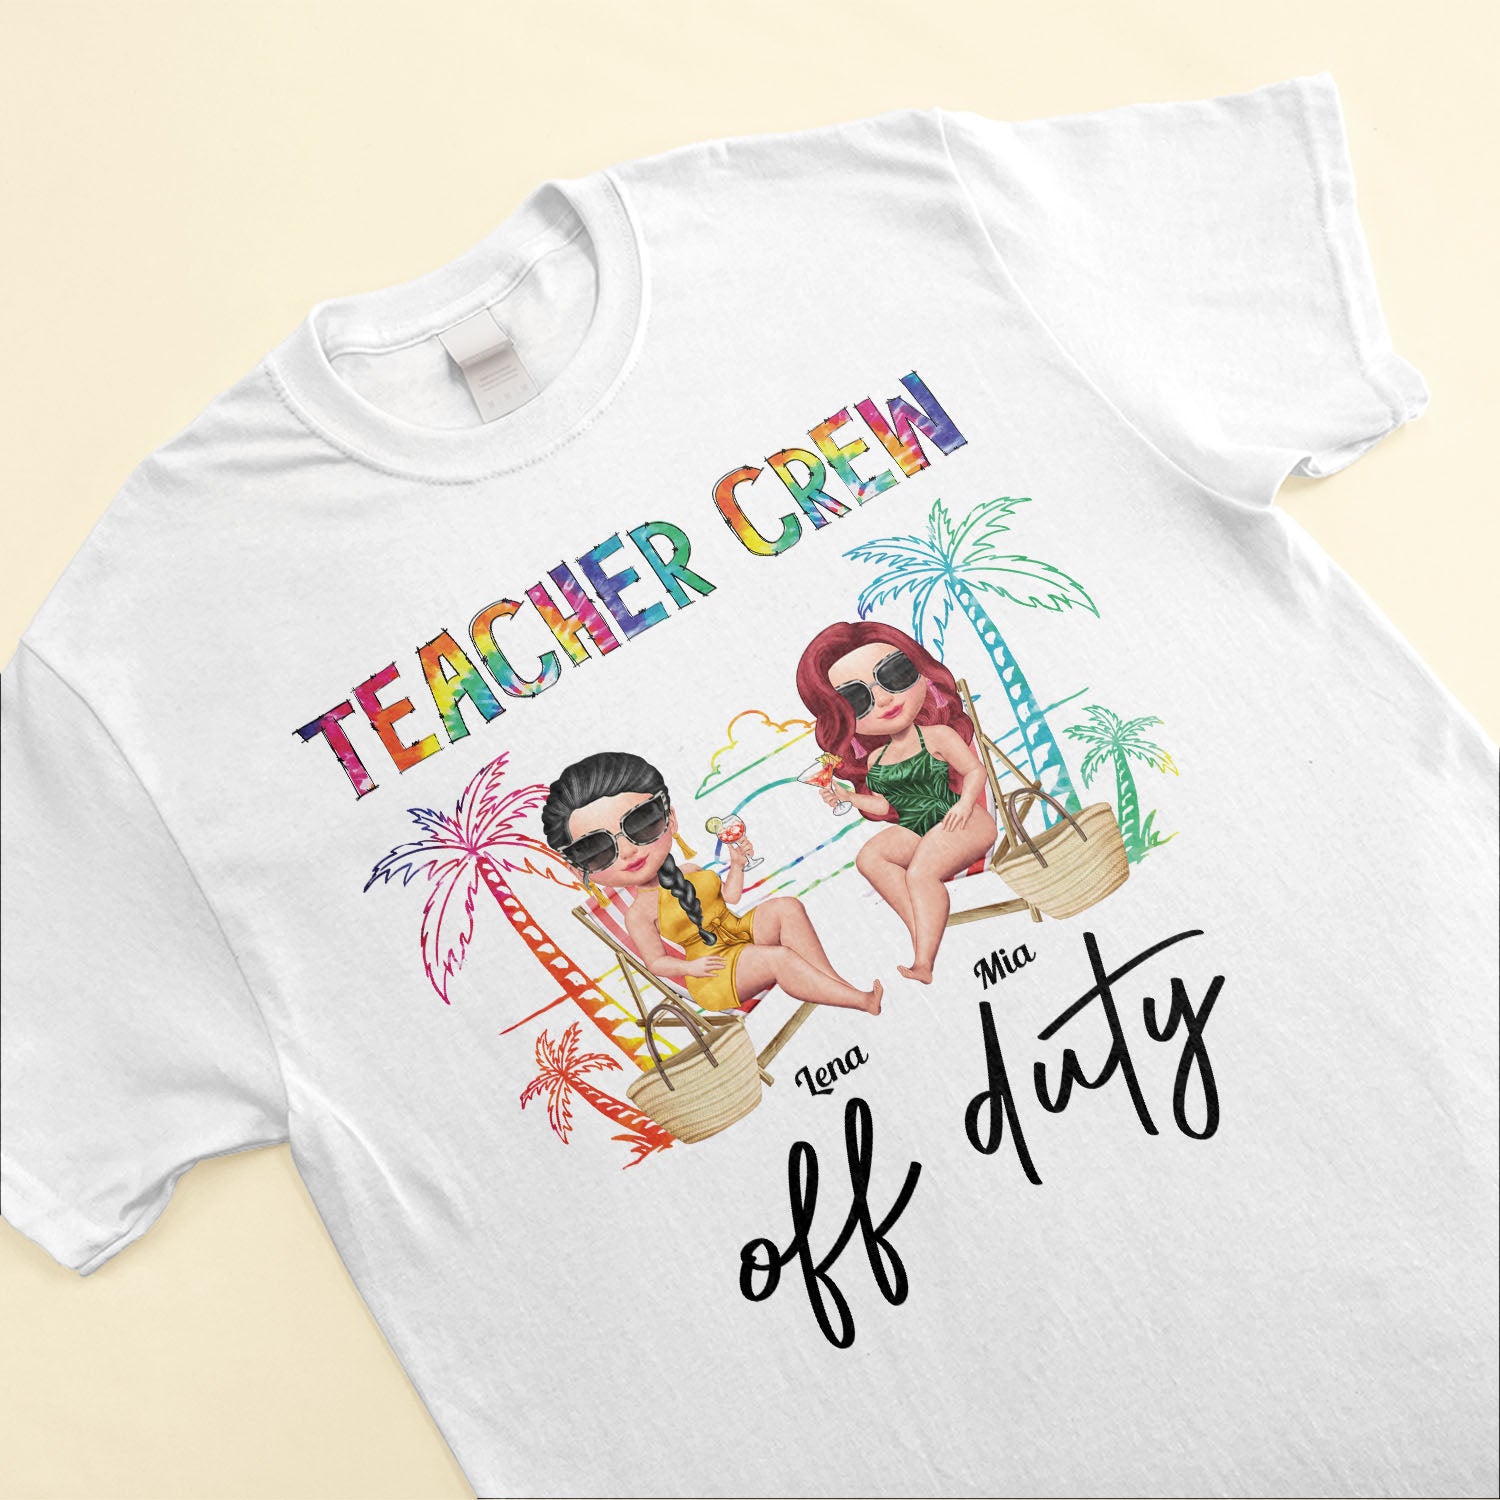 Teacher Crew Off Duty - Personalized Shirt - Summer Gift For Teacher, Funny Gift, Colleagues, Summer Break, Traveling, Beaching